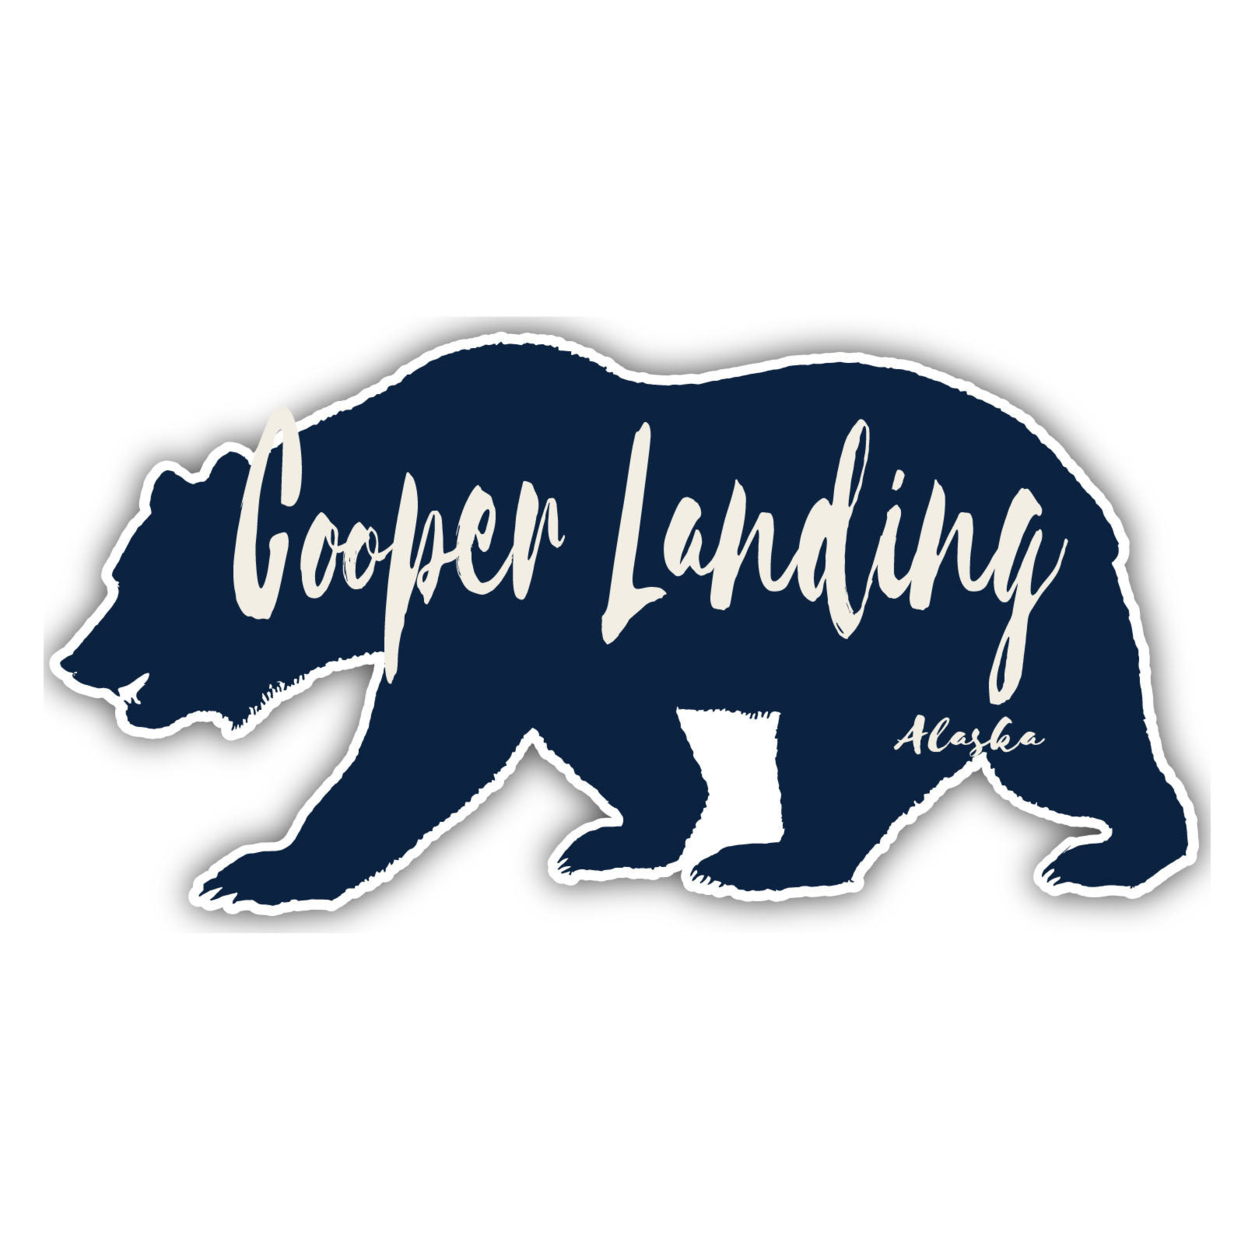 Cooper Landing Alaska Souvenir Decorative Stickers (Choose Theme And Size) - Single Unit, 2-Inch, Tent